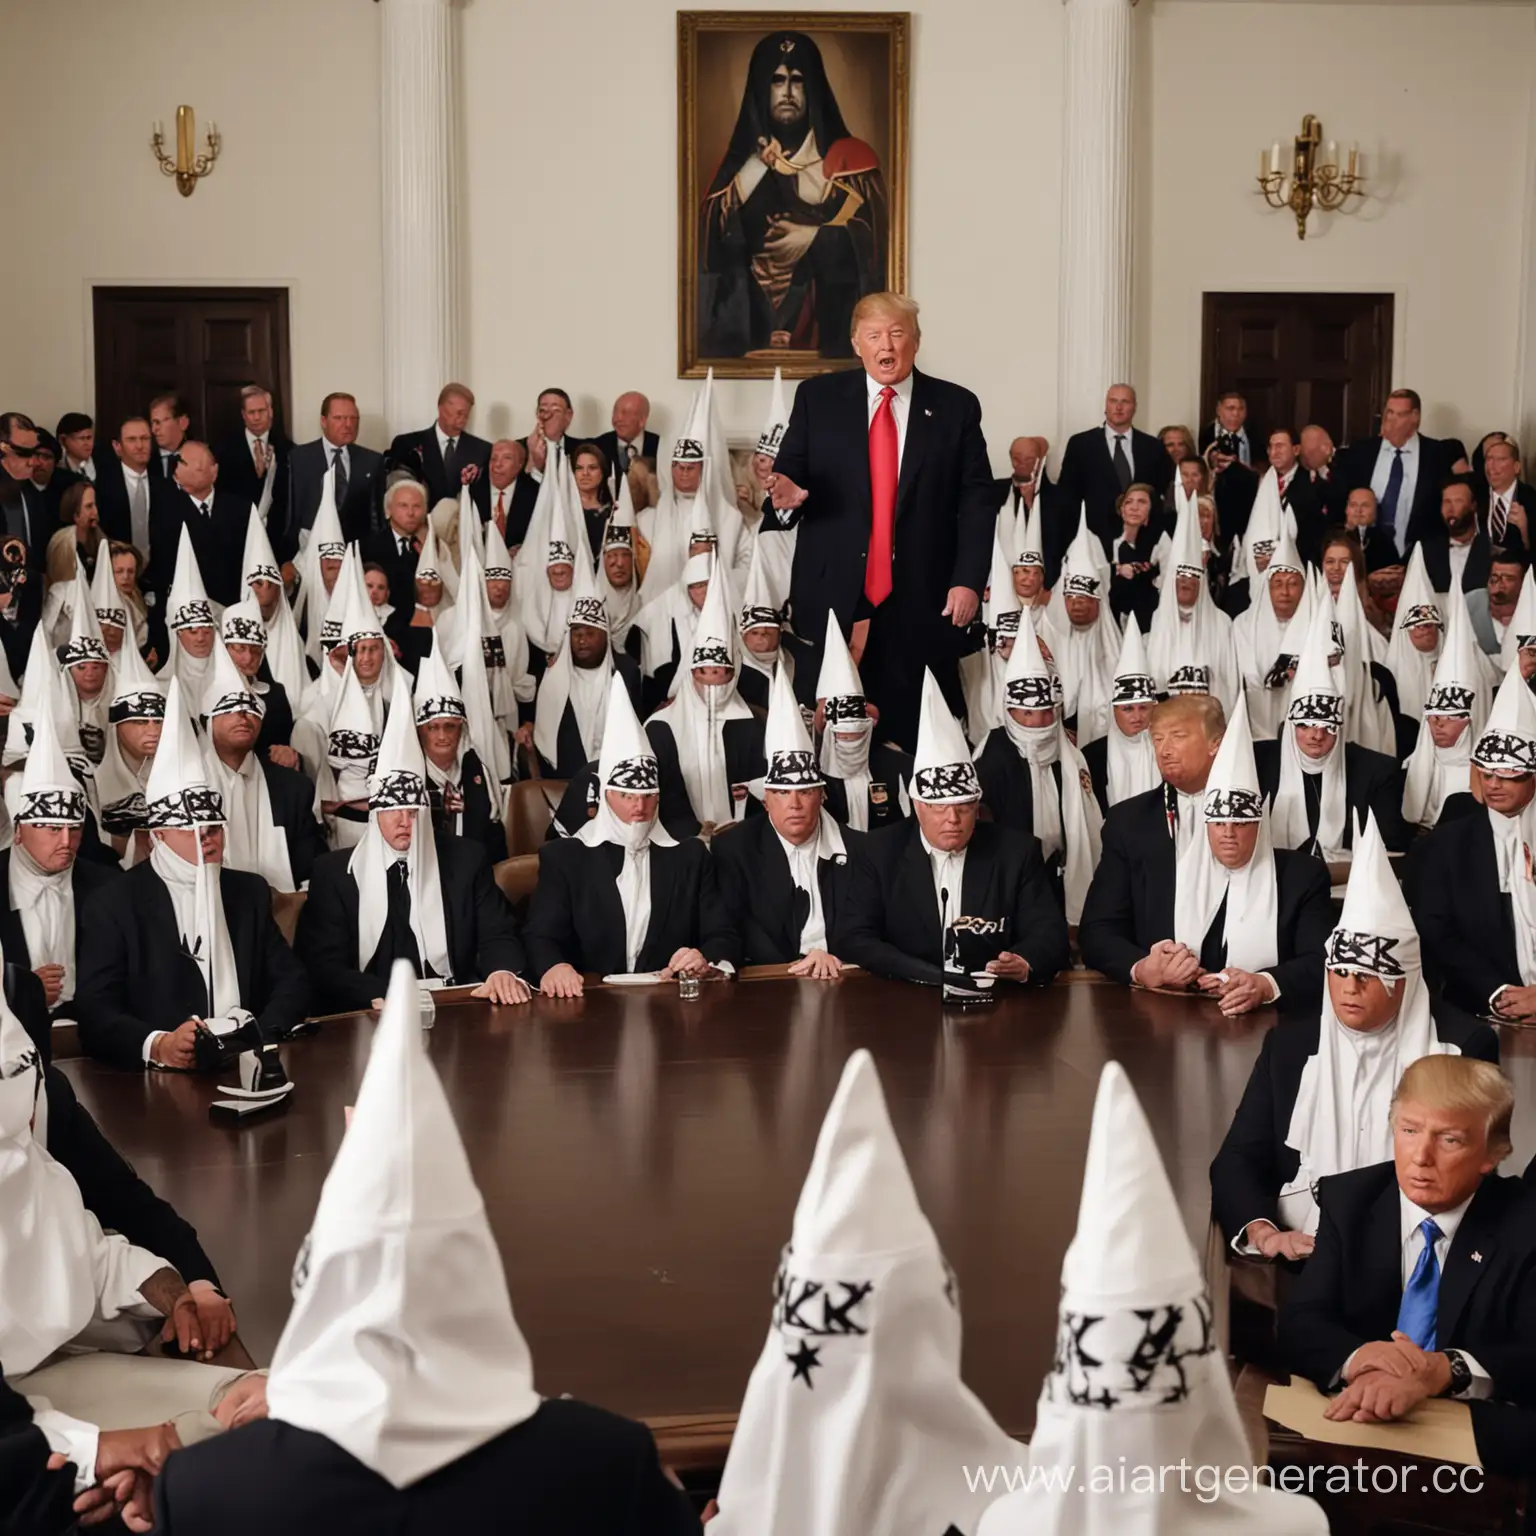 Donald Trump speaking at a KKK meeting